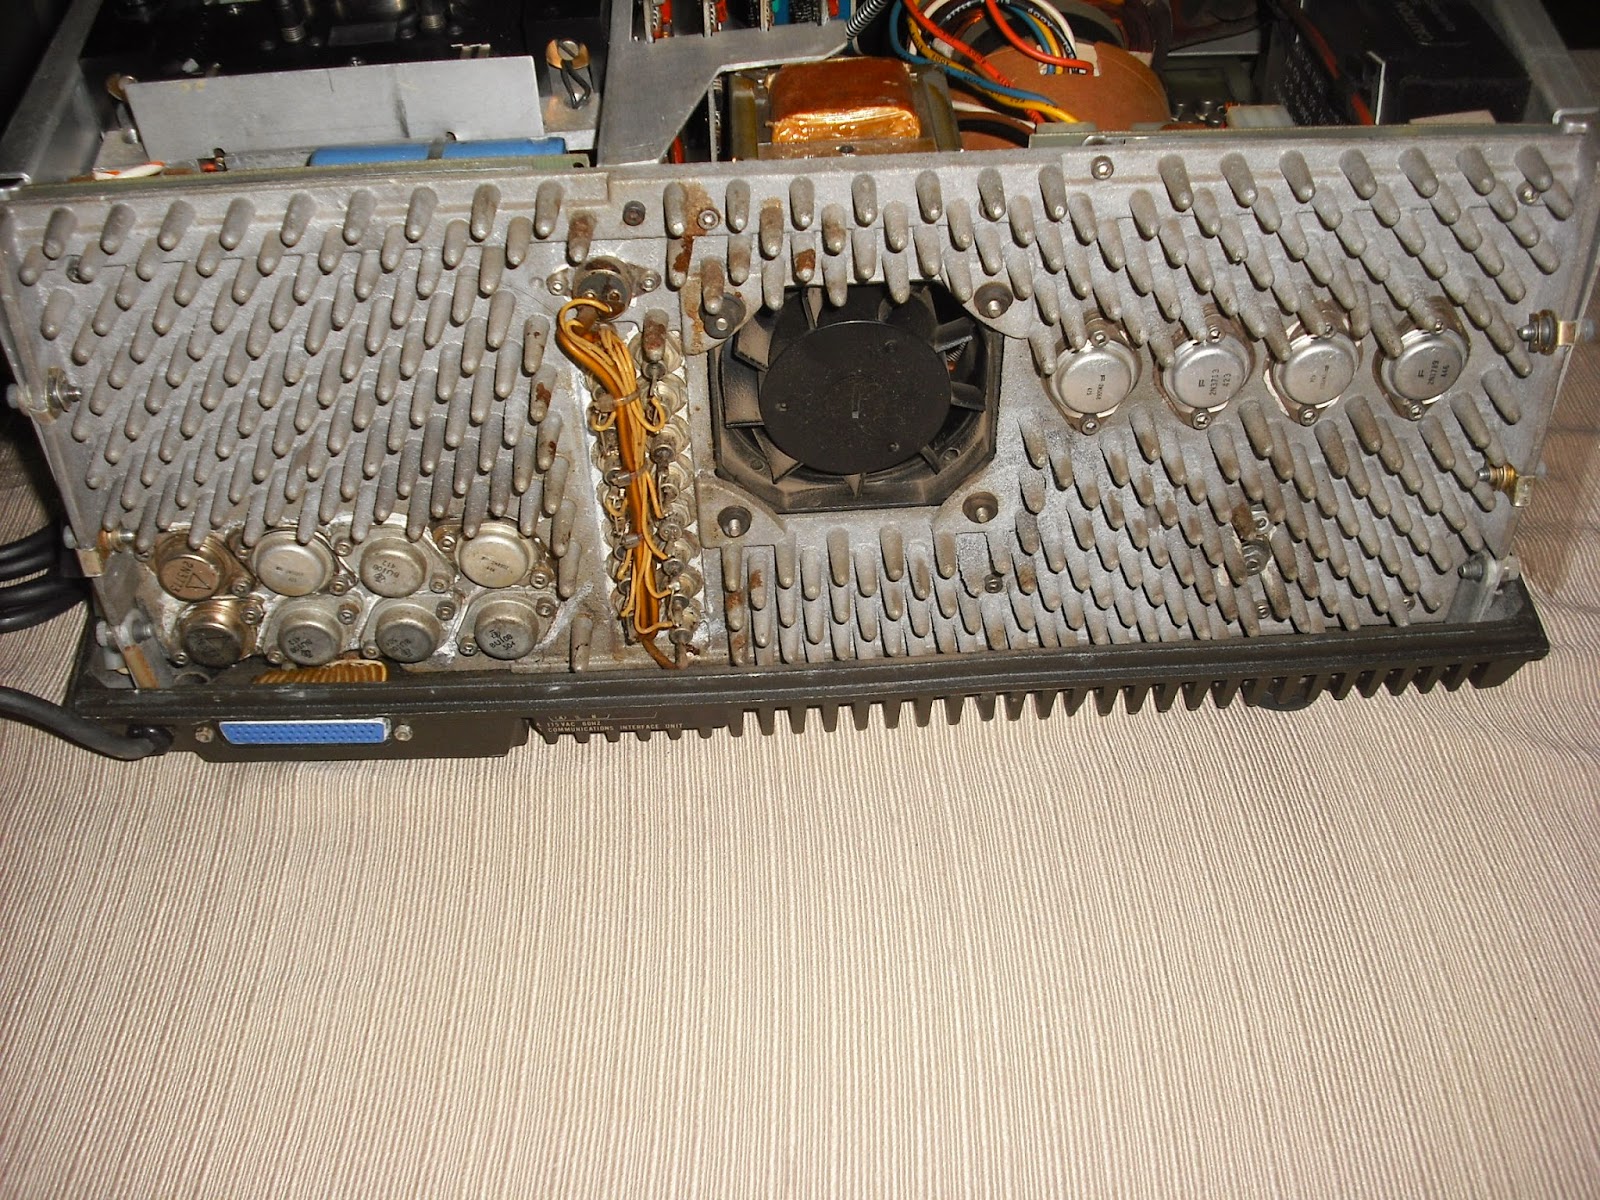 CTC2200 back panel heat sink